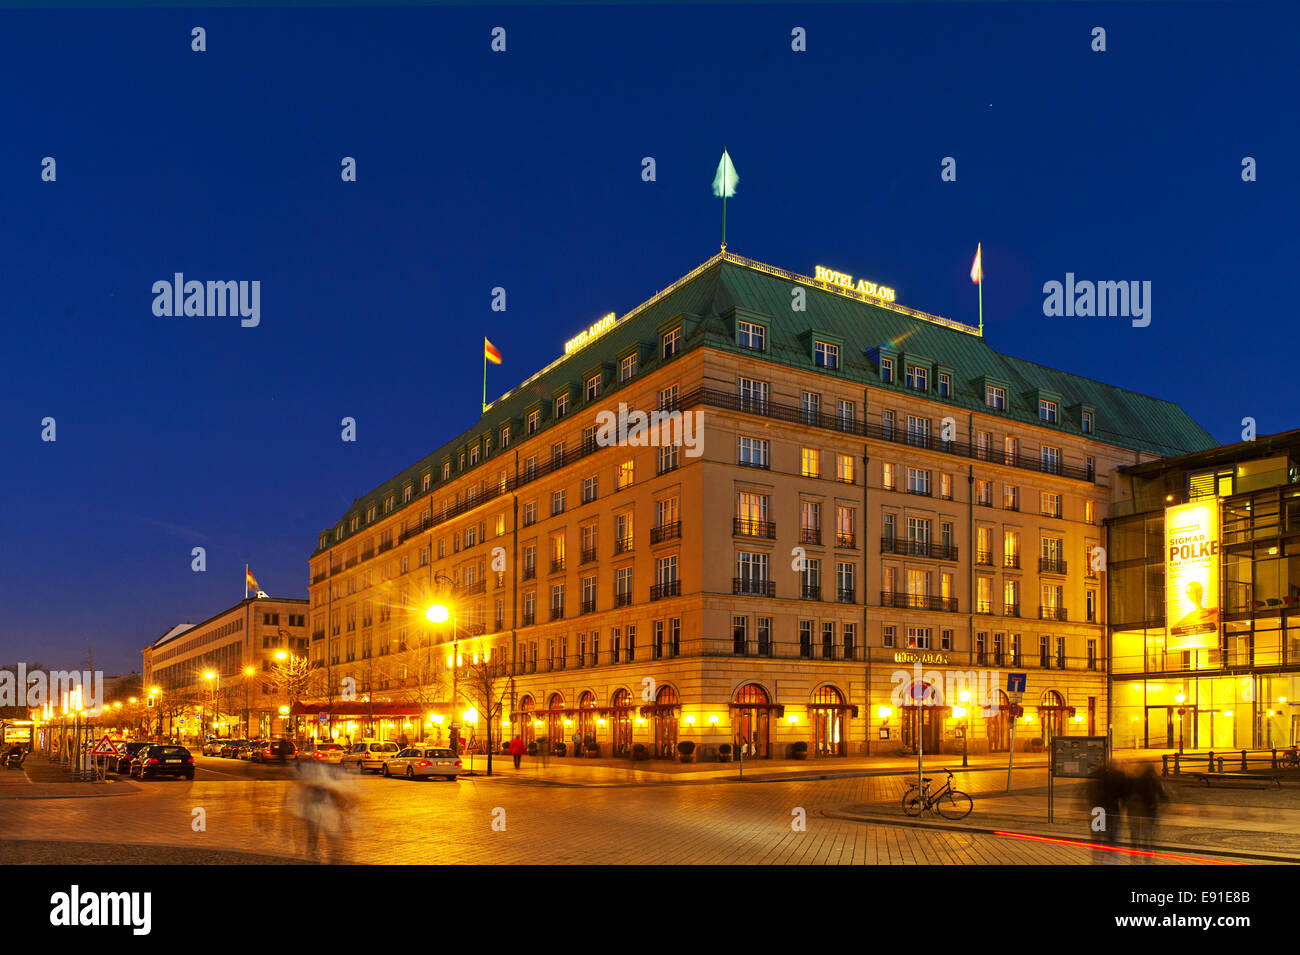 Hotel Adlon by night Stock Photo